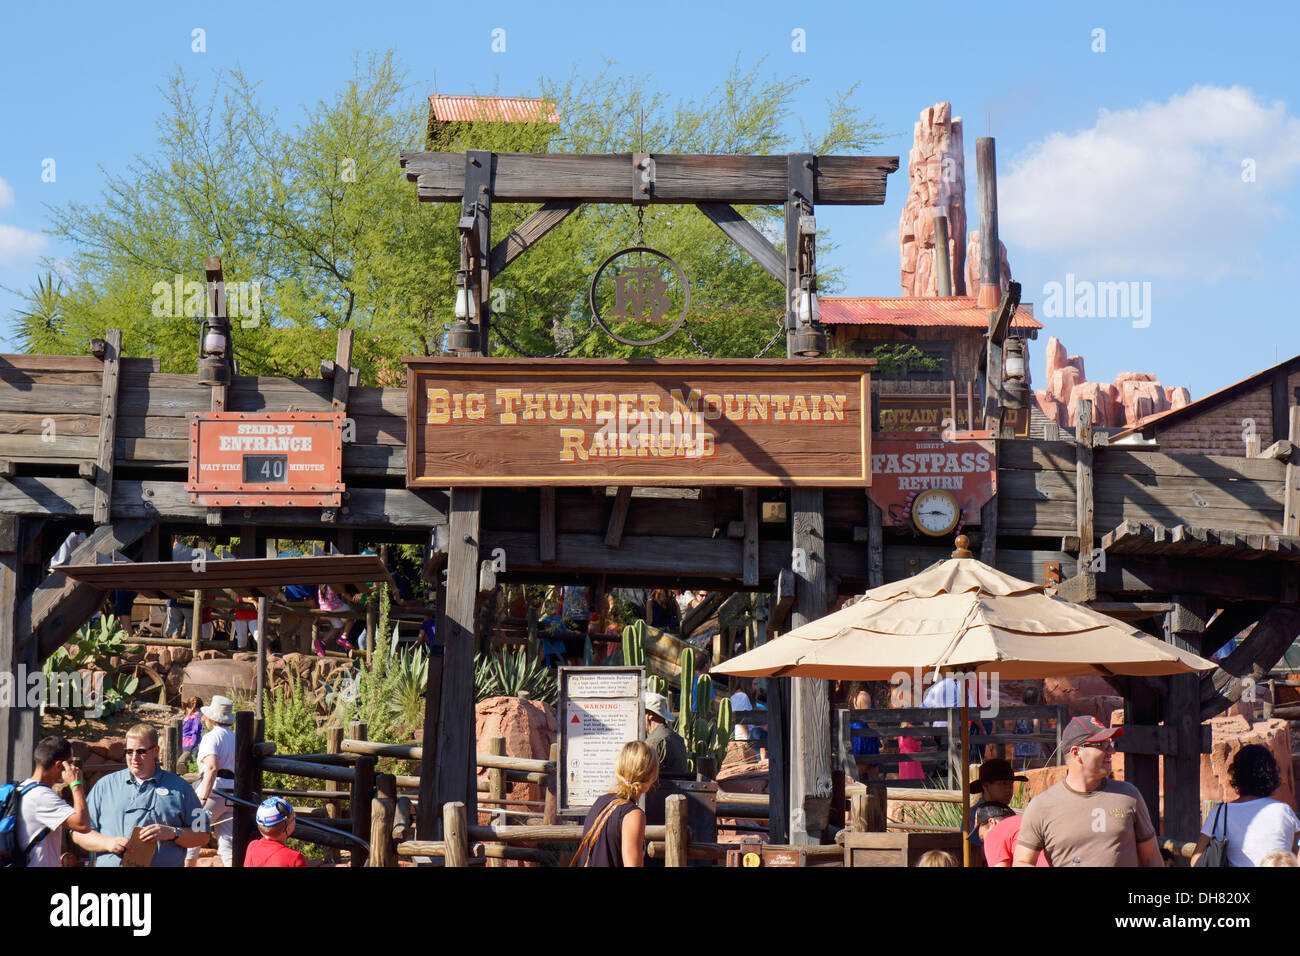 Big Thunder Mountain Railroad Rides Roller Coaster dans Adventureland au Magic Kingdom, Disney World, Orlando, Floride Banque D'Images